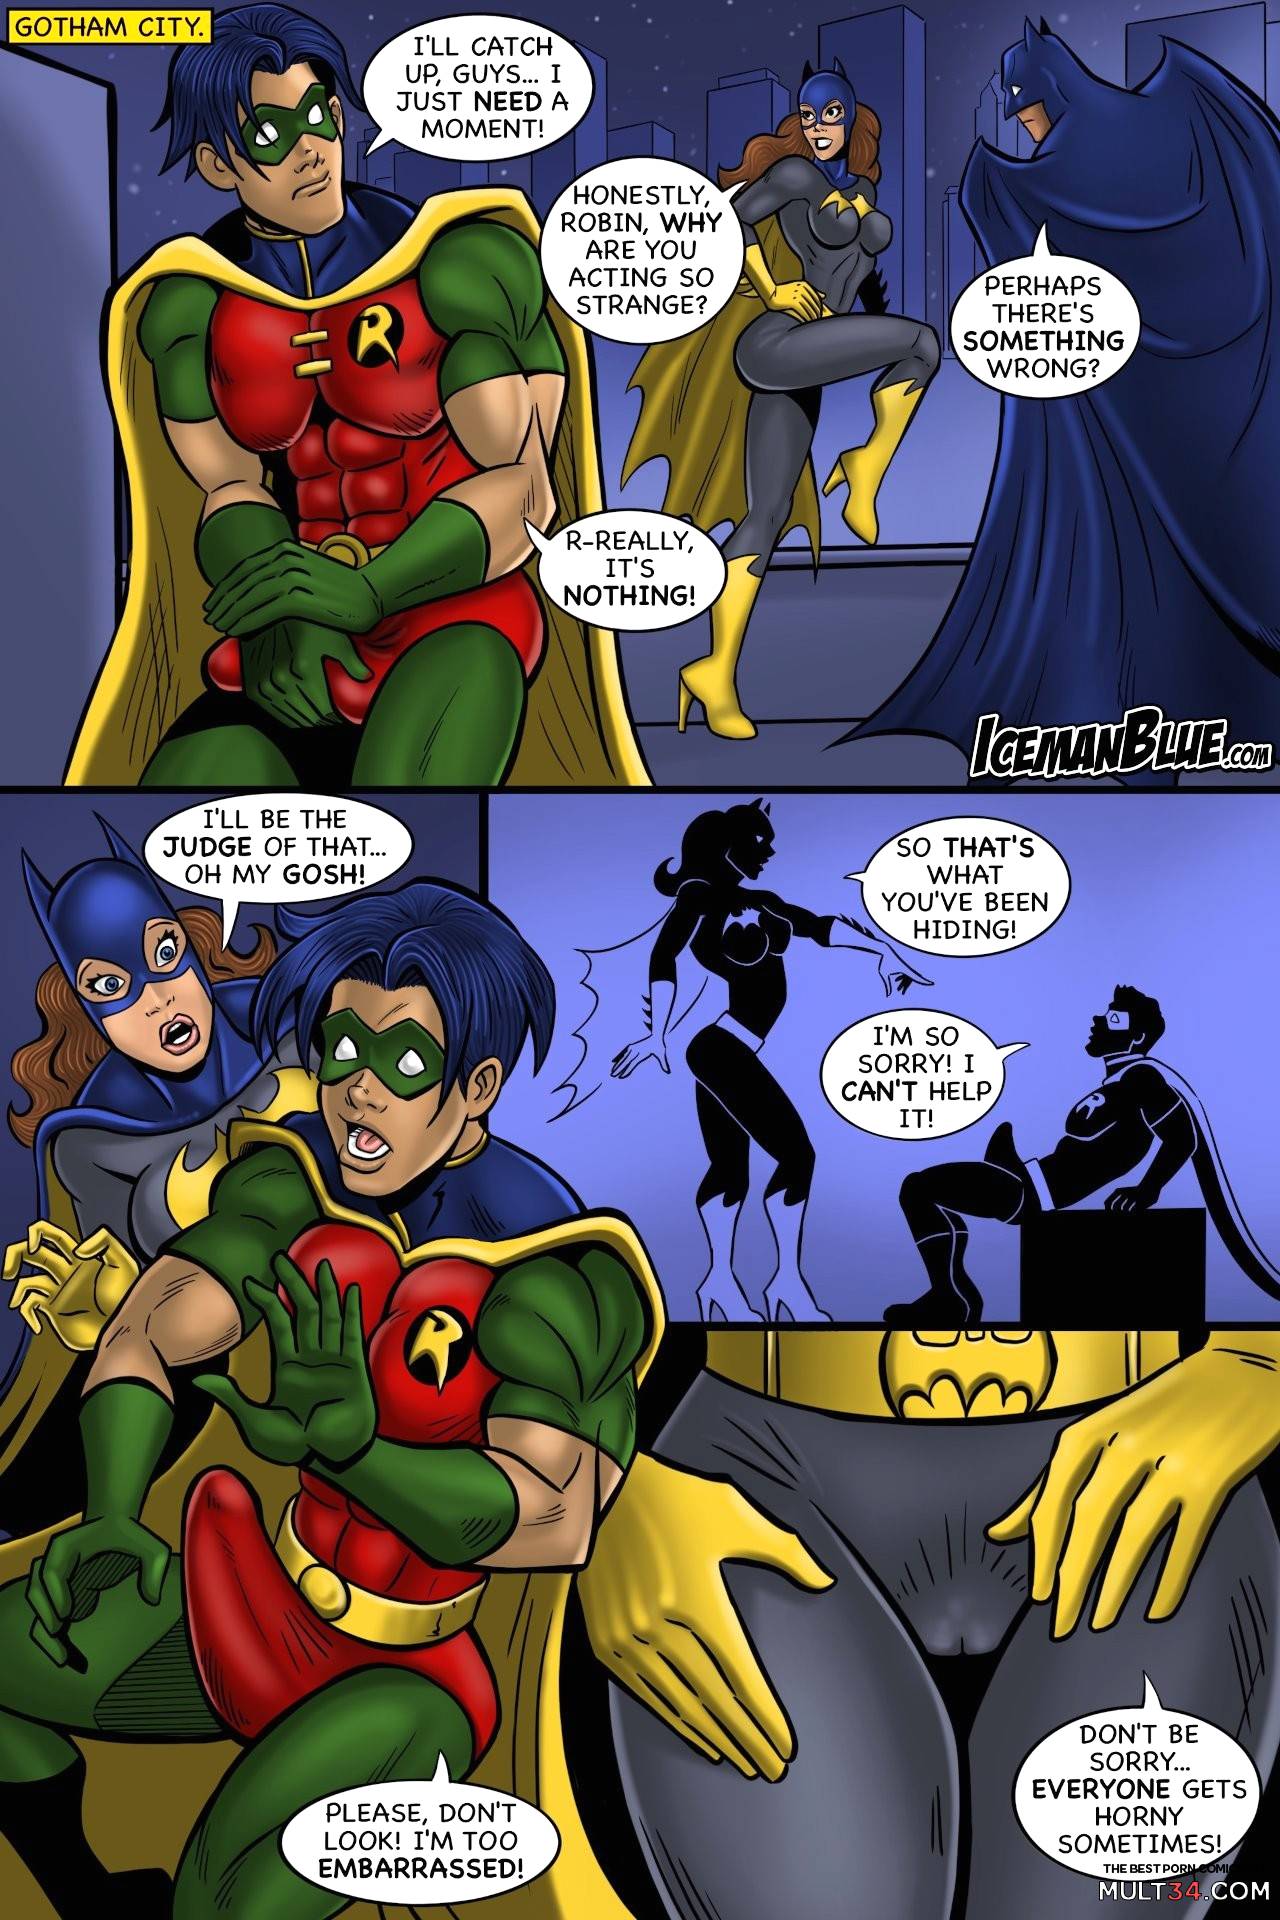 Batgirl rule 34 comic